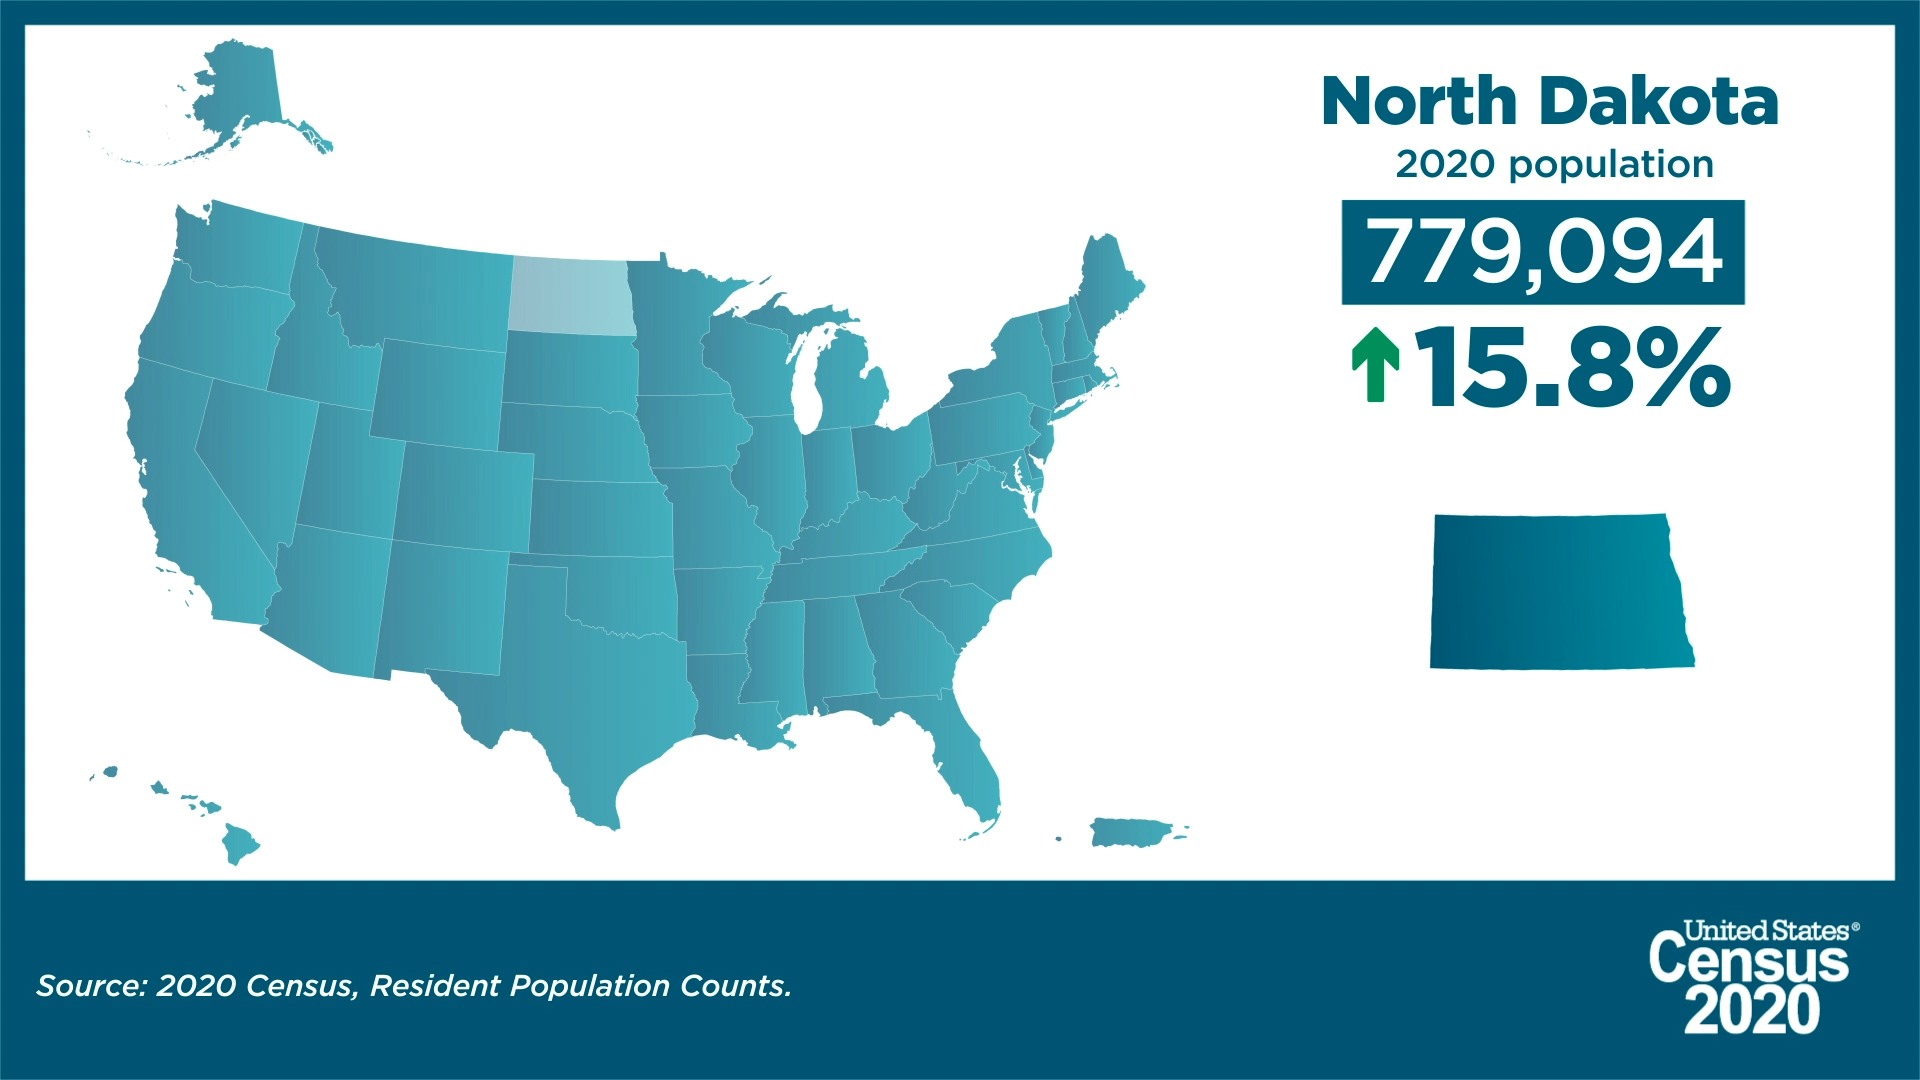 North Dakota 2020 population: 779,094; up 15.8% from 2010